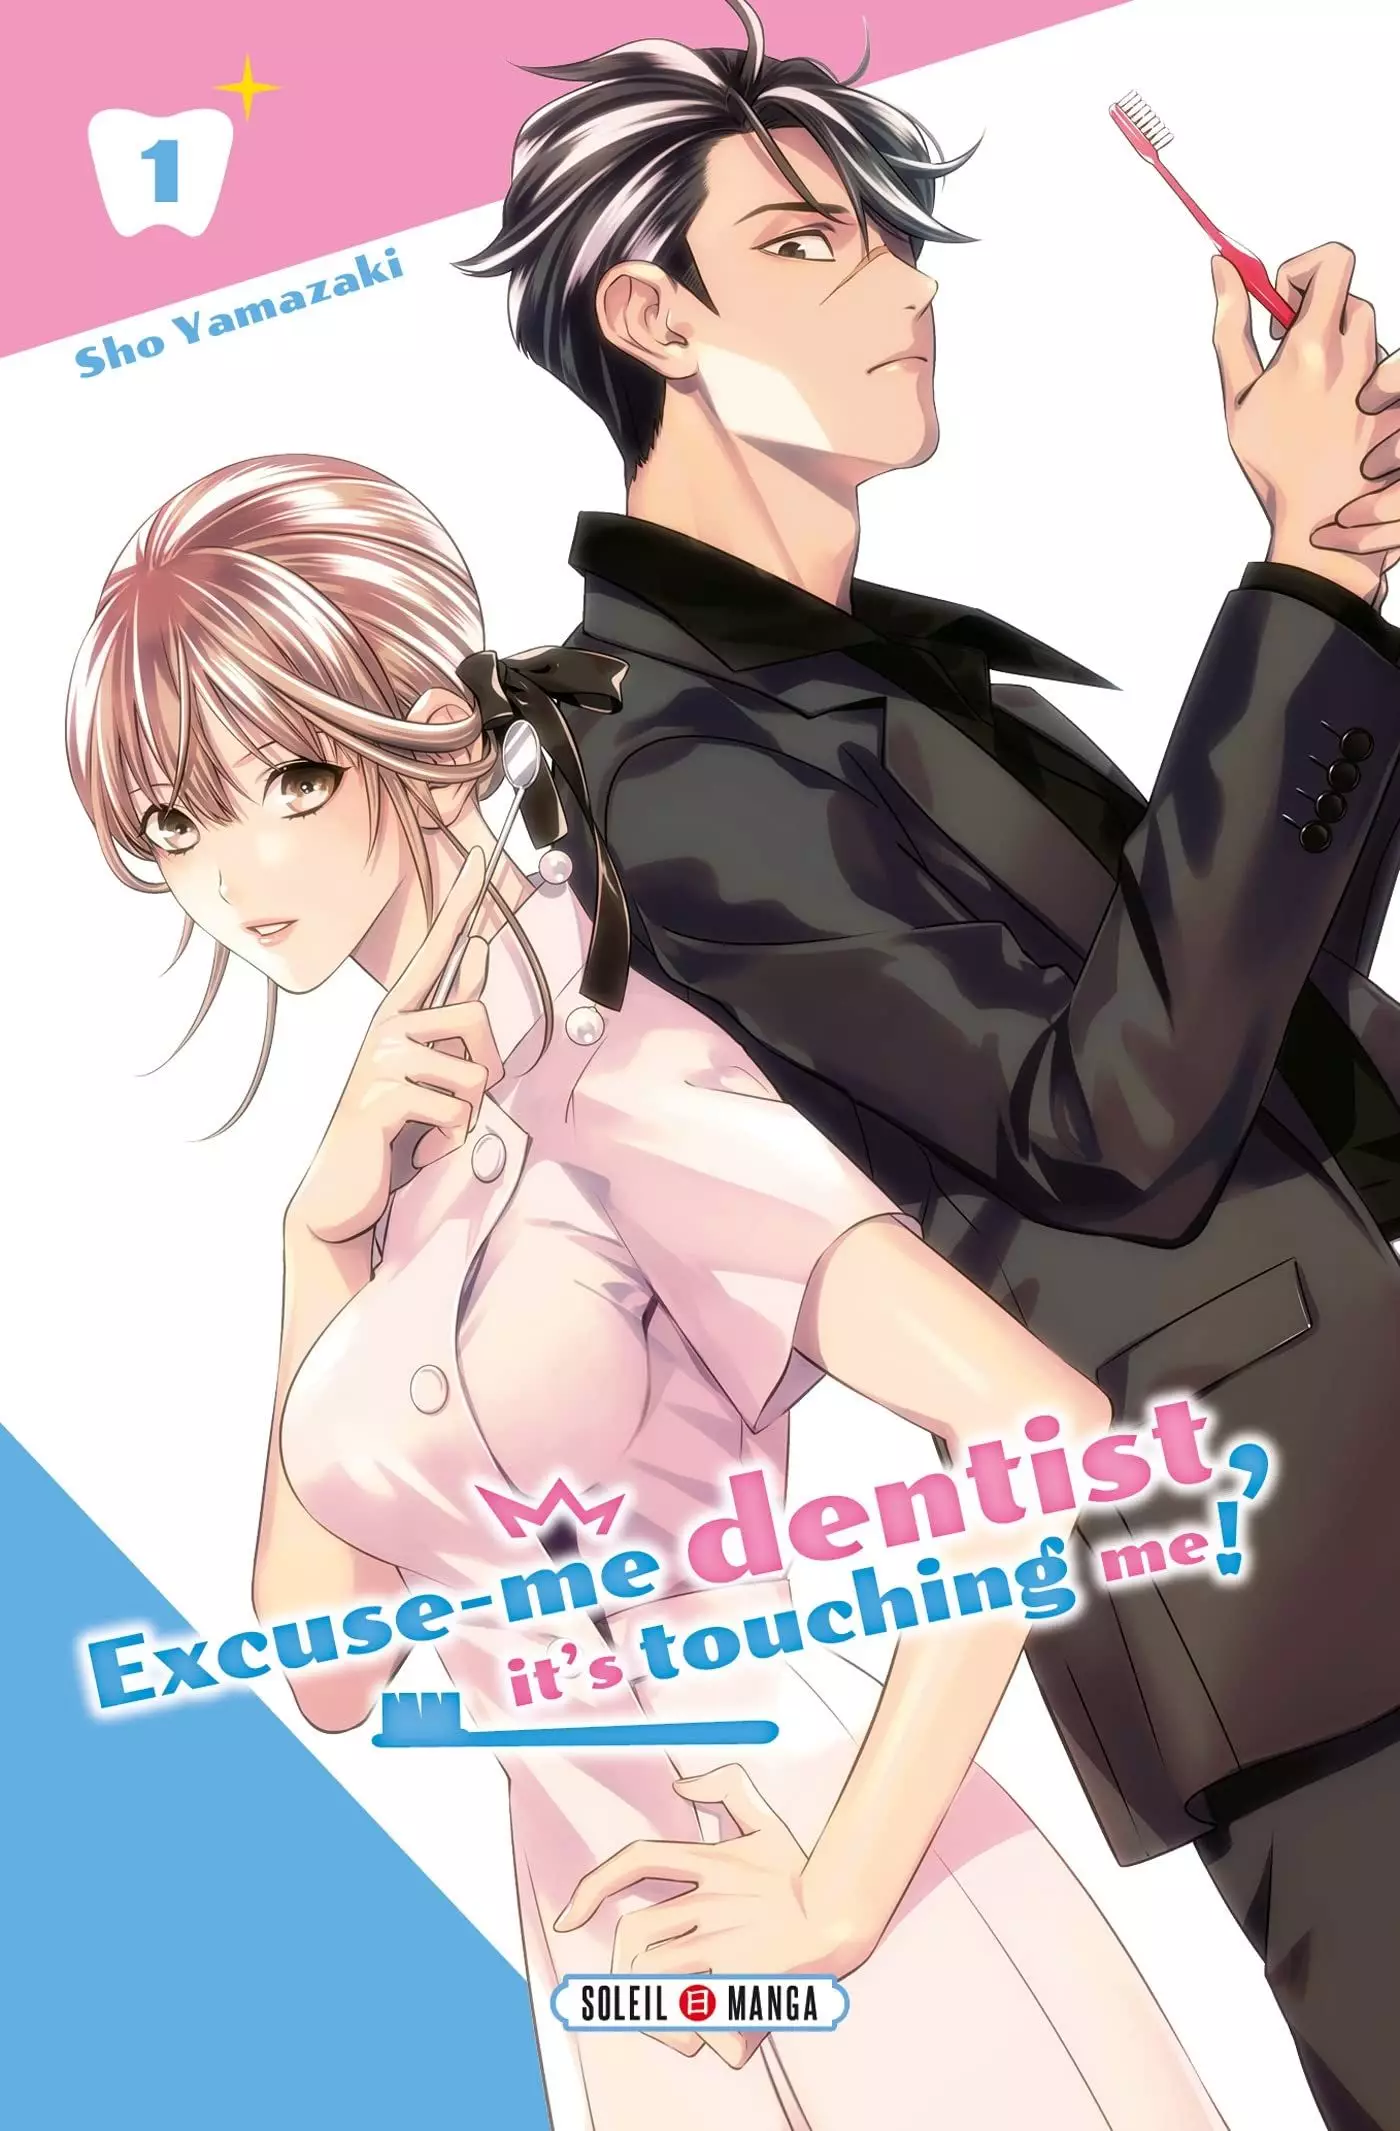 Manga - Excuse me dentist, it's touching me !